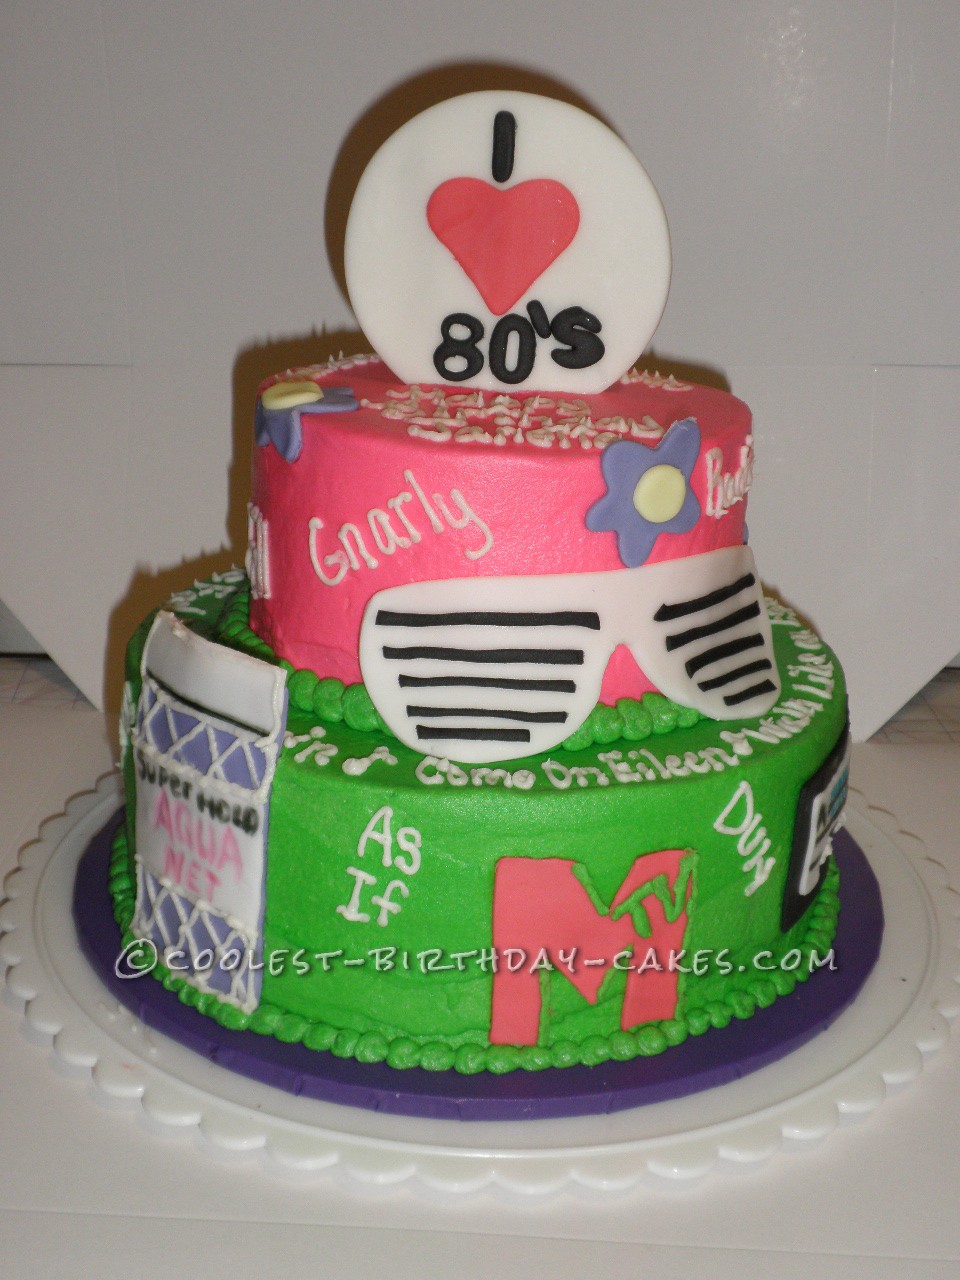 Cool 80's Theme Cake